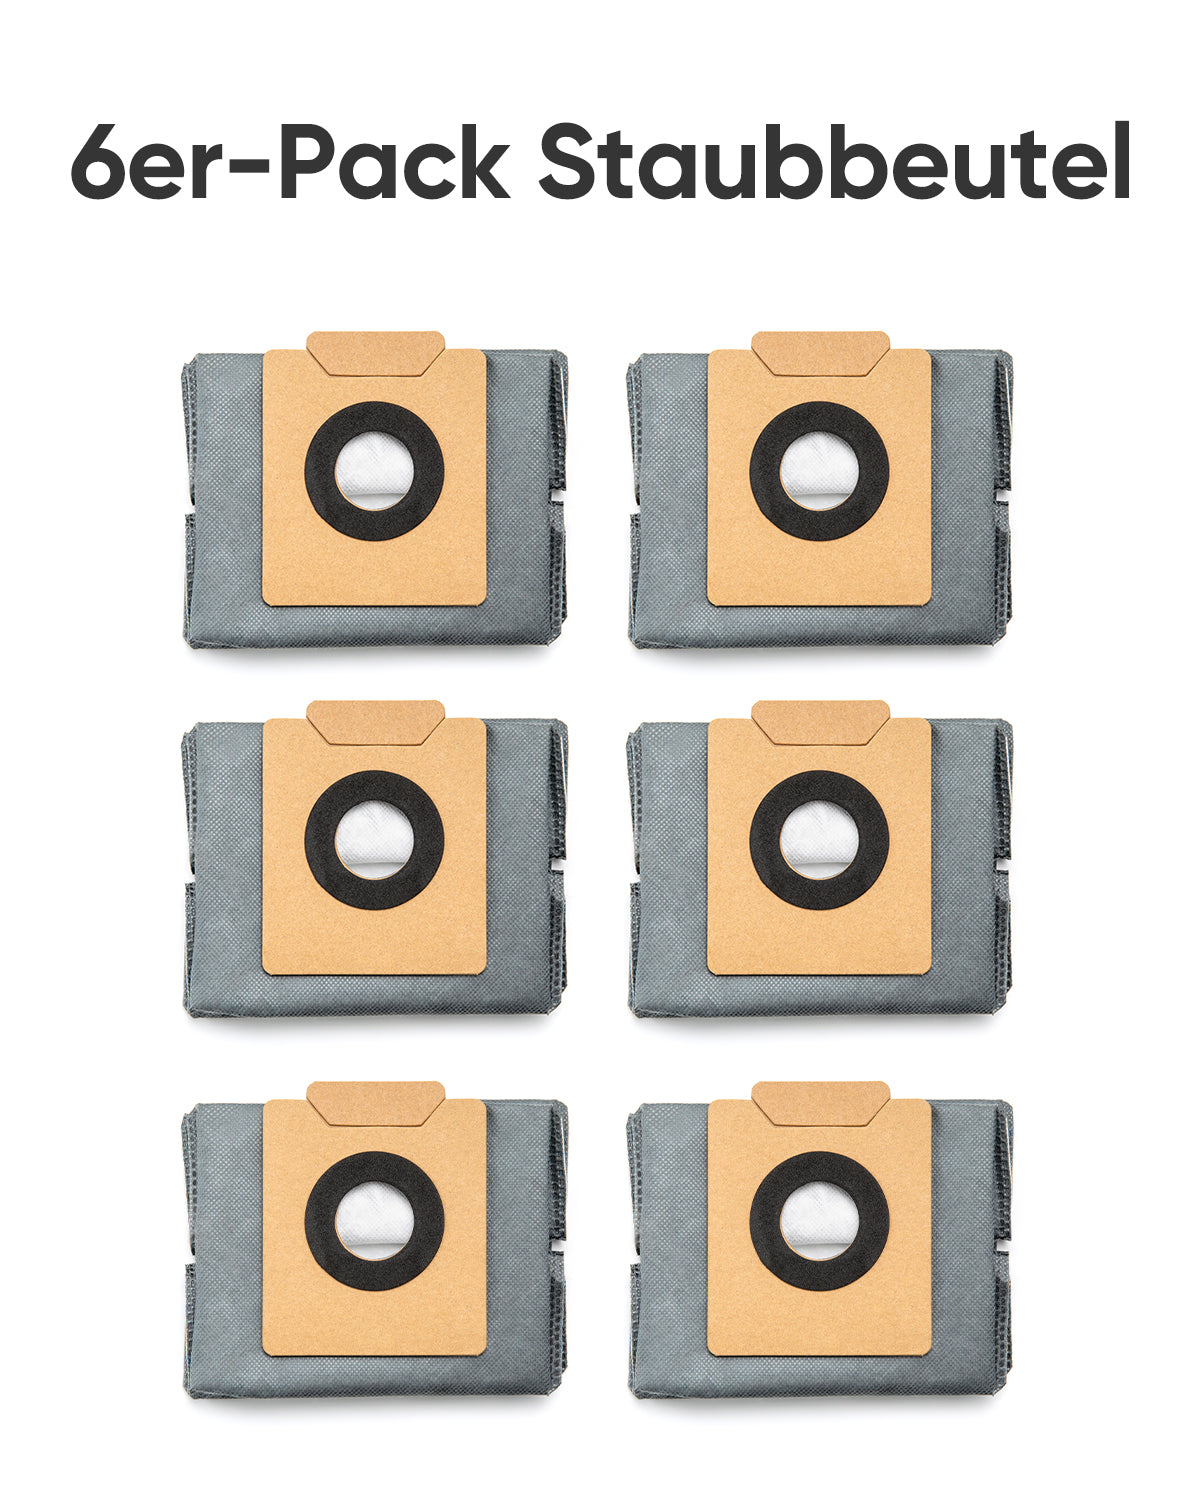 6er-Pack Staubbeutel